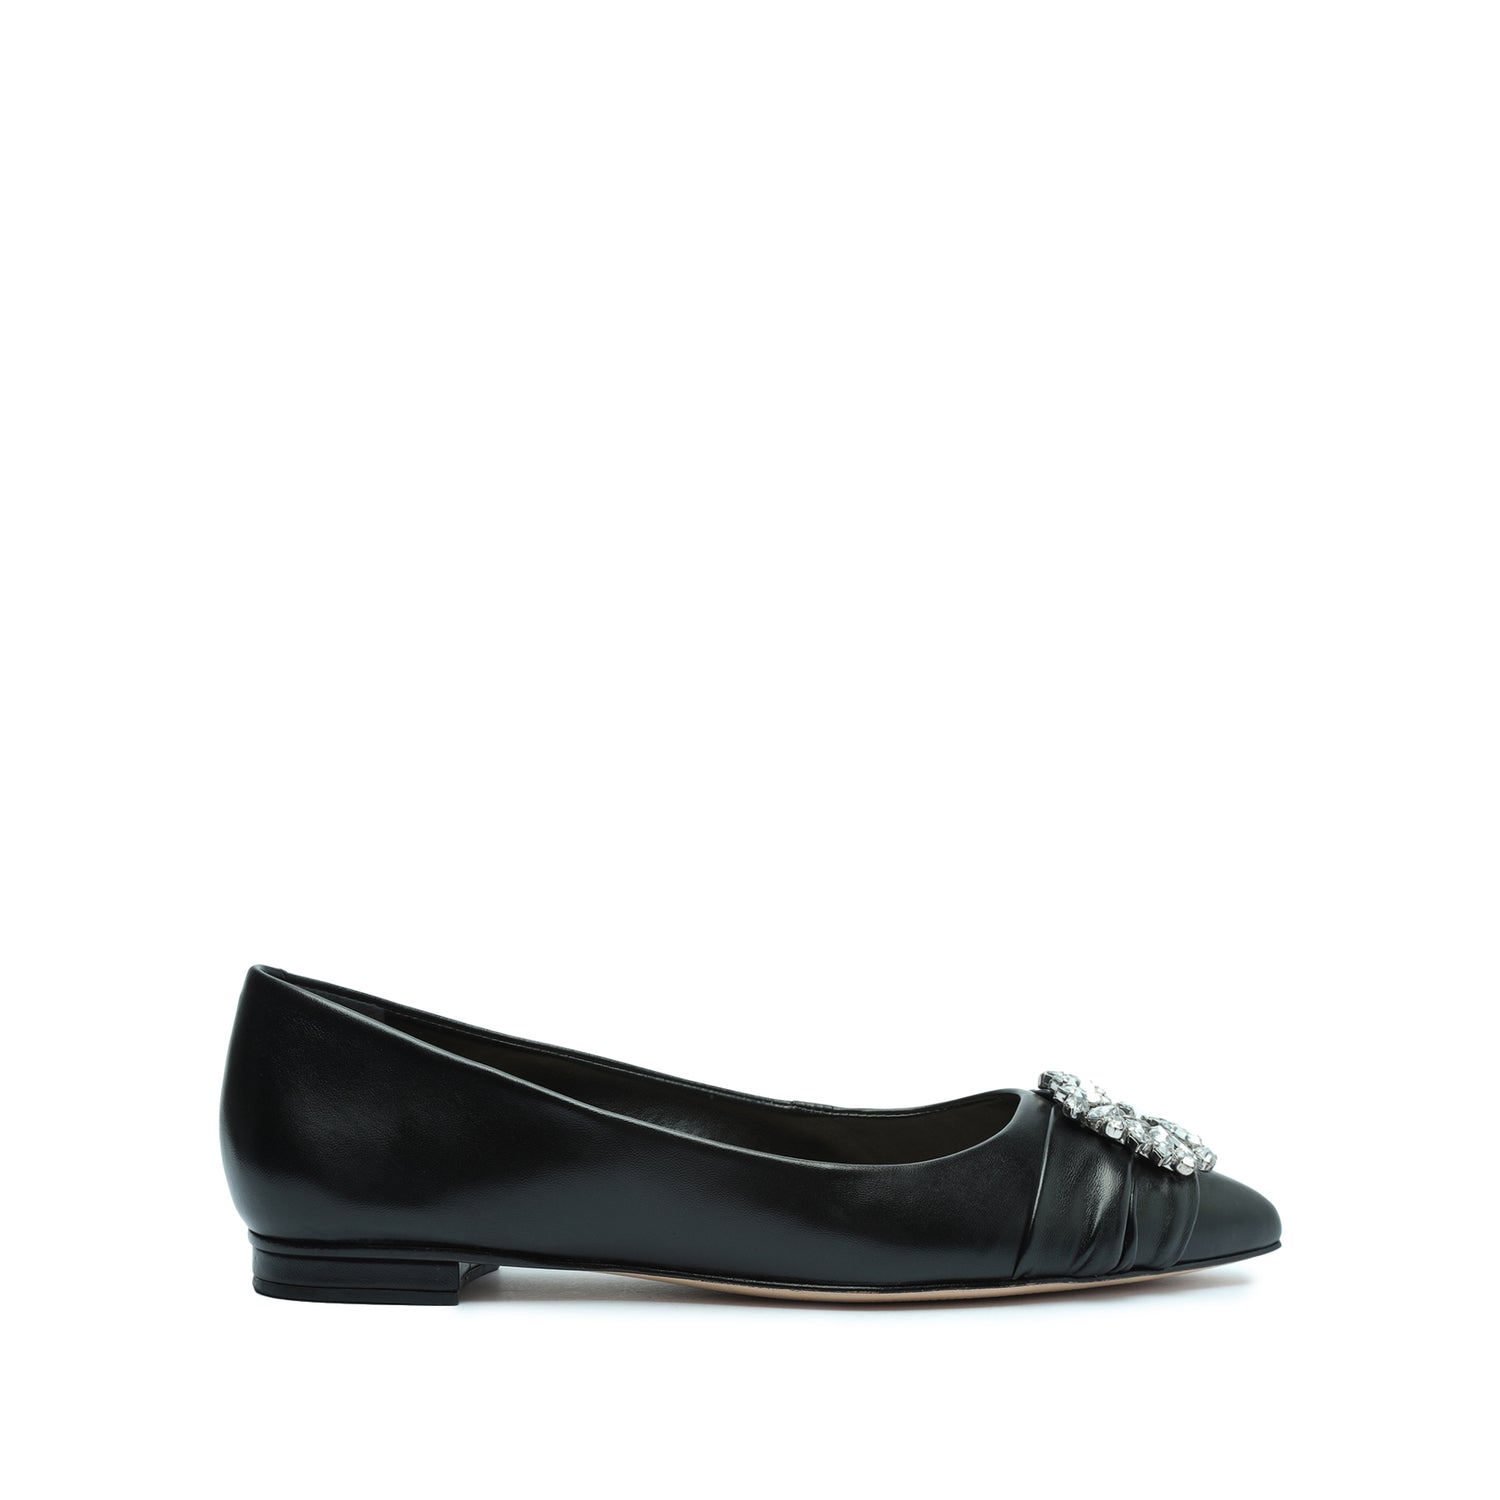 Meisho Nappa Leather Flat Flats Sale 5 Black Nappa Leather - Schutz Shoes